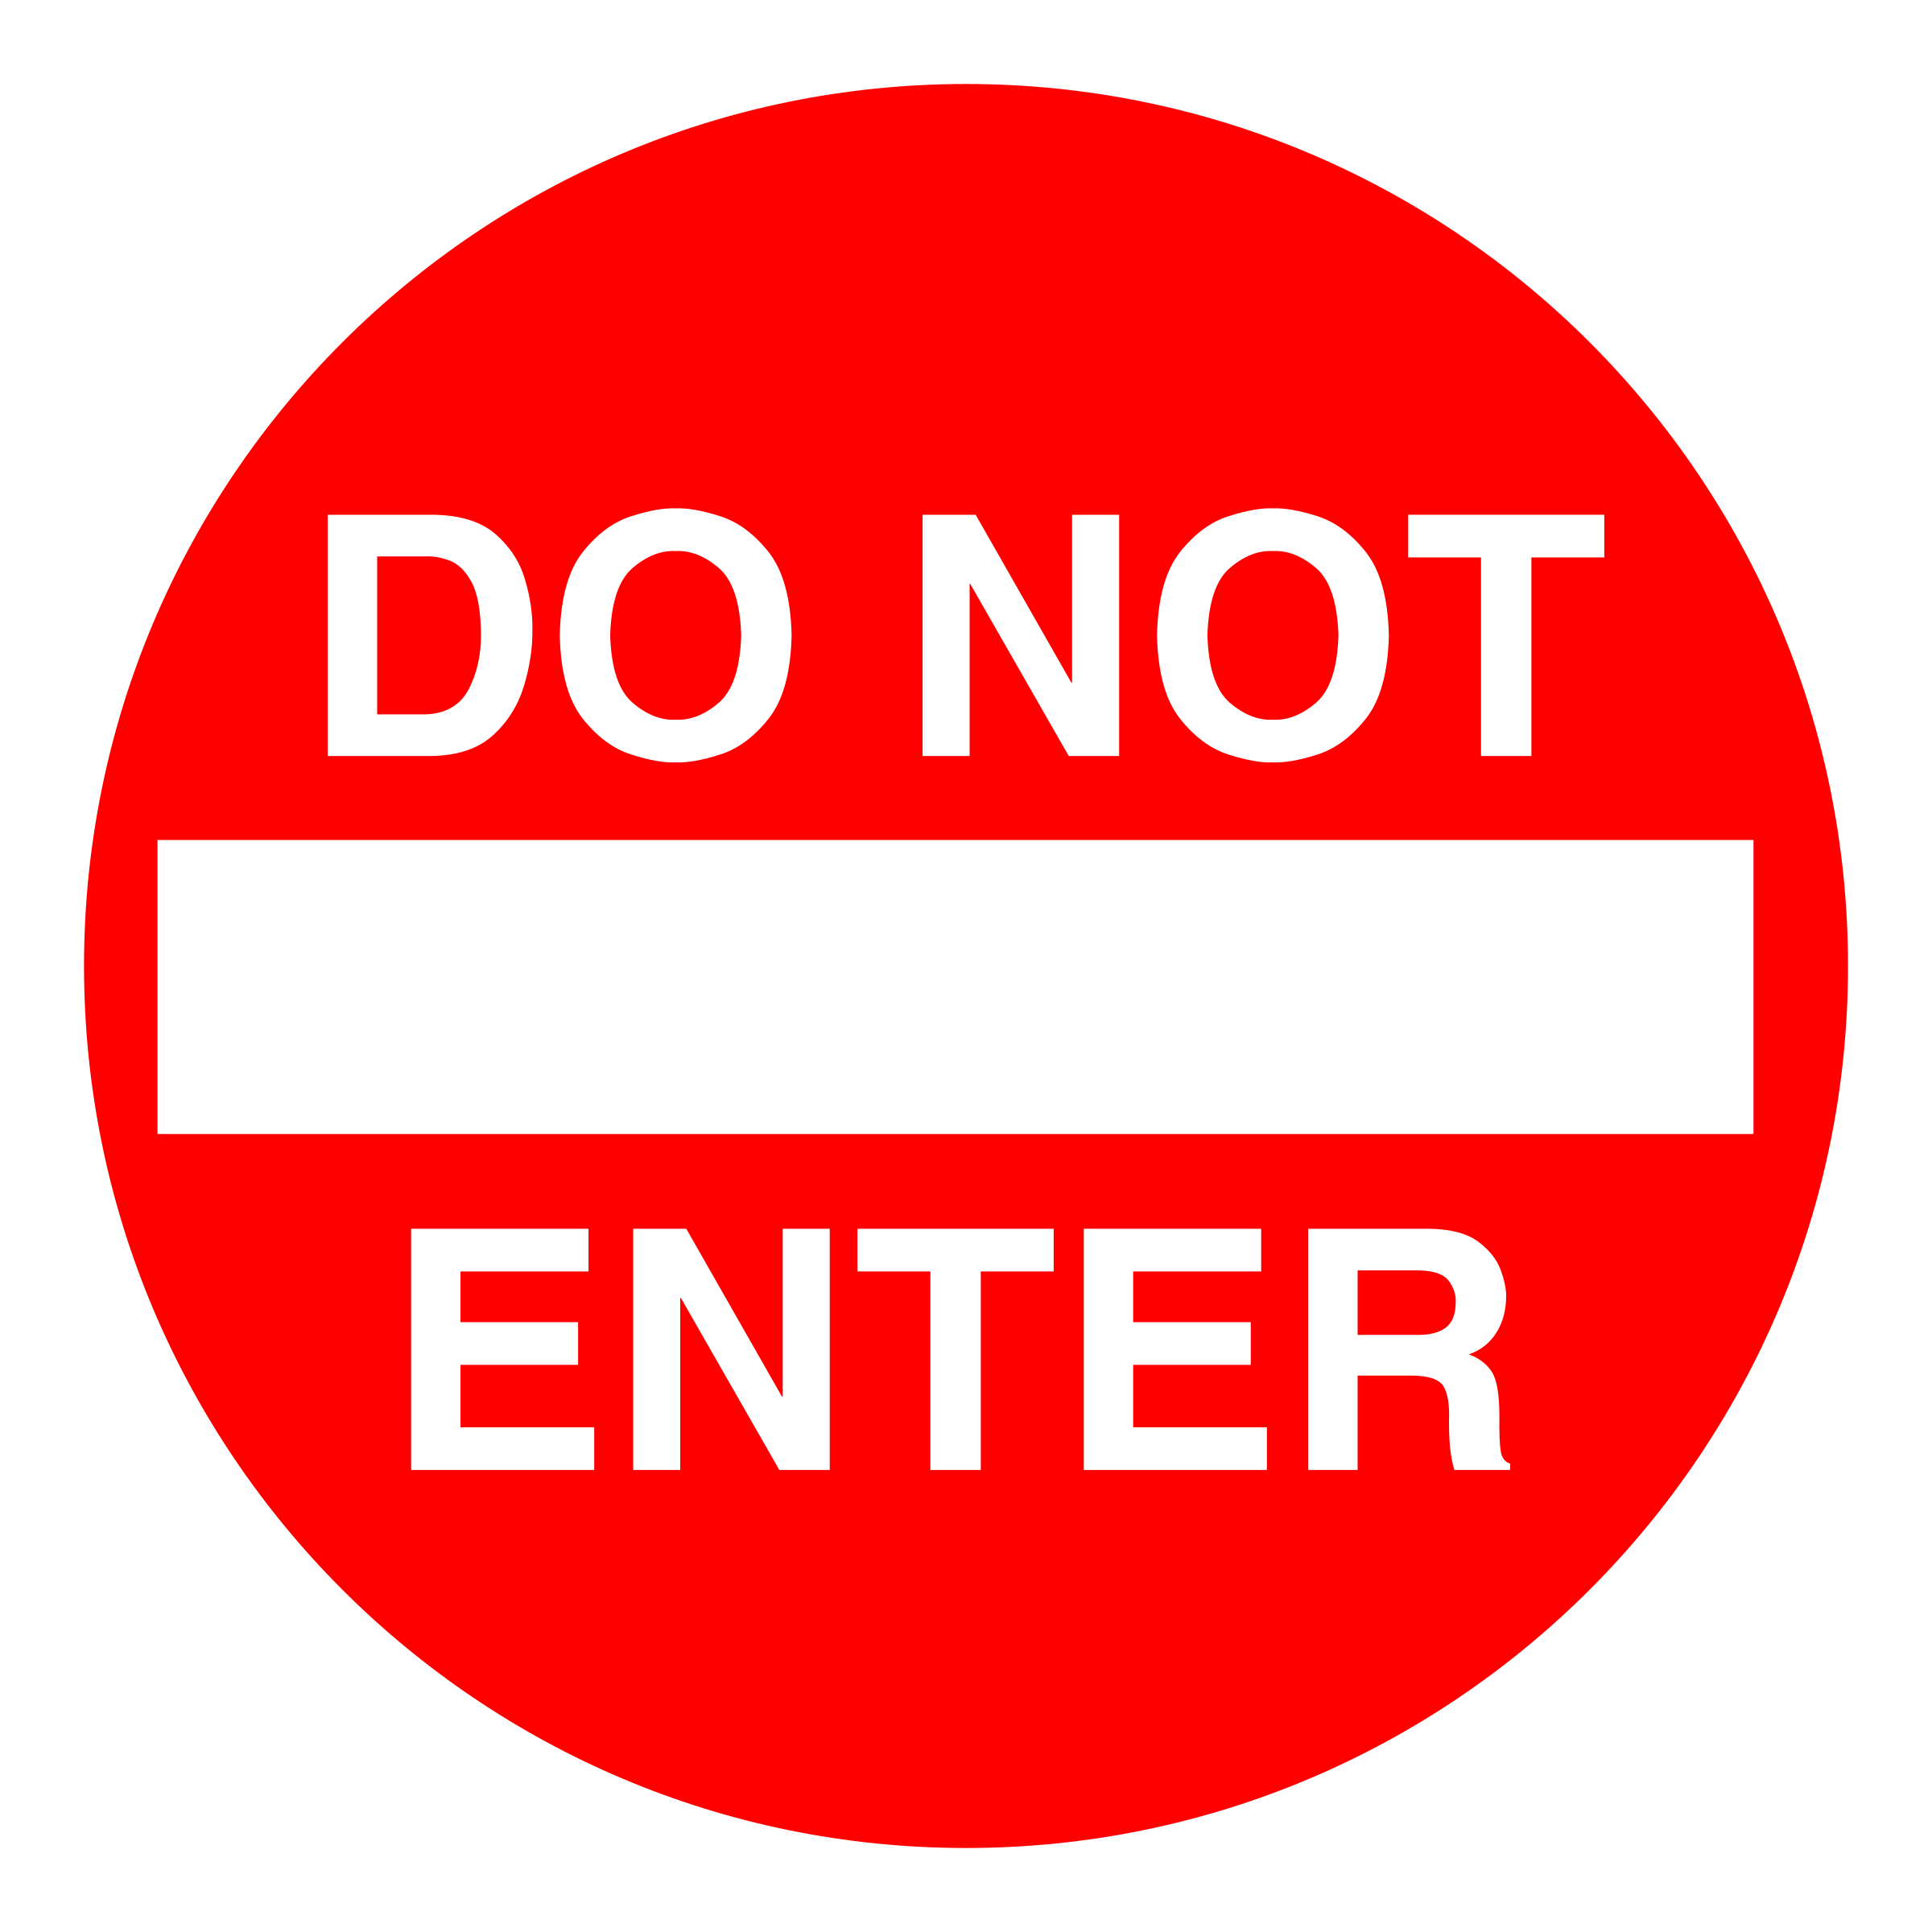 Do Not Enter sign SharePoint Maven